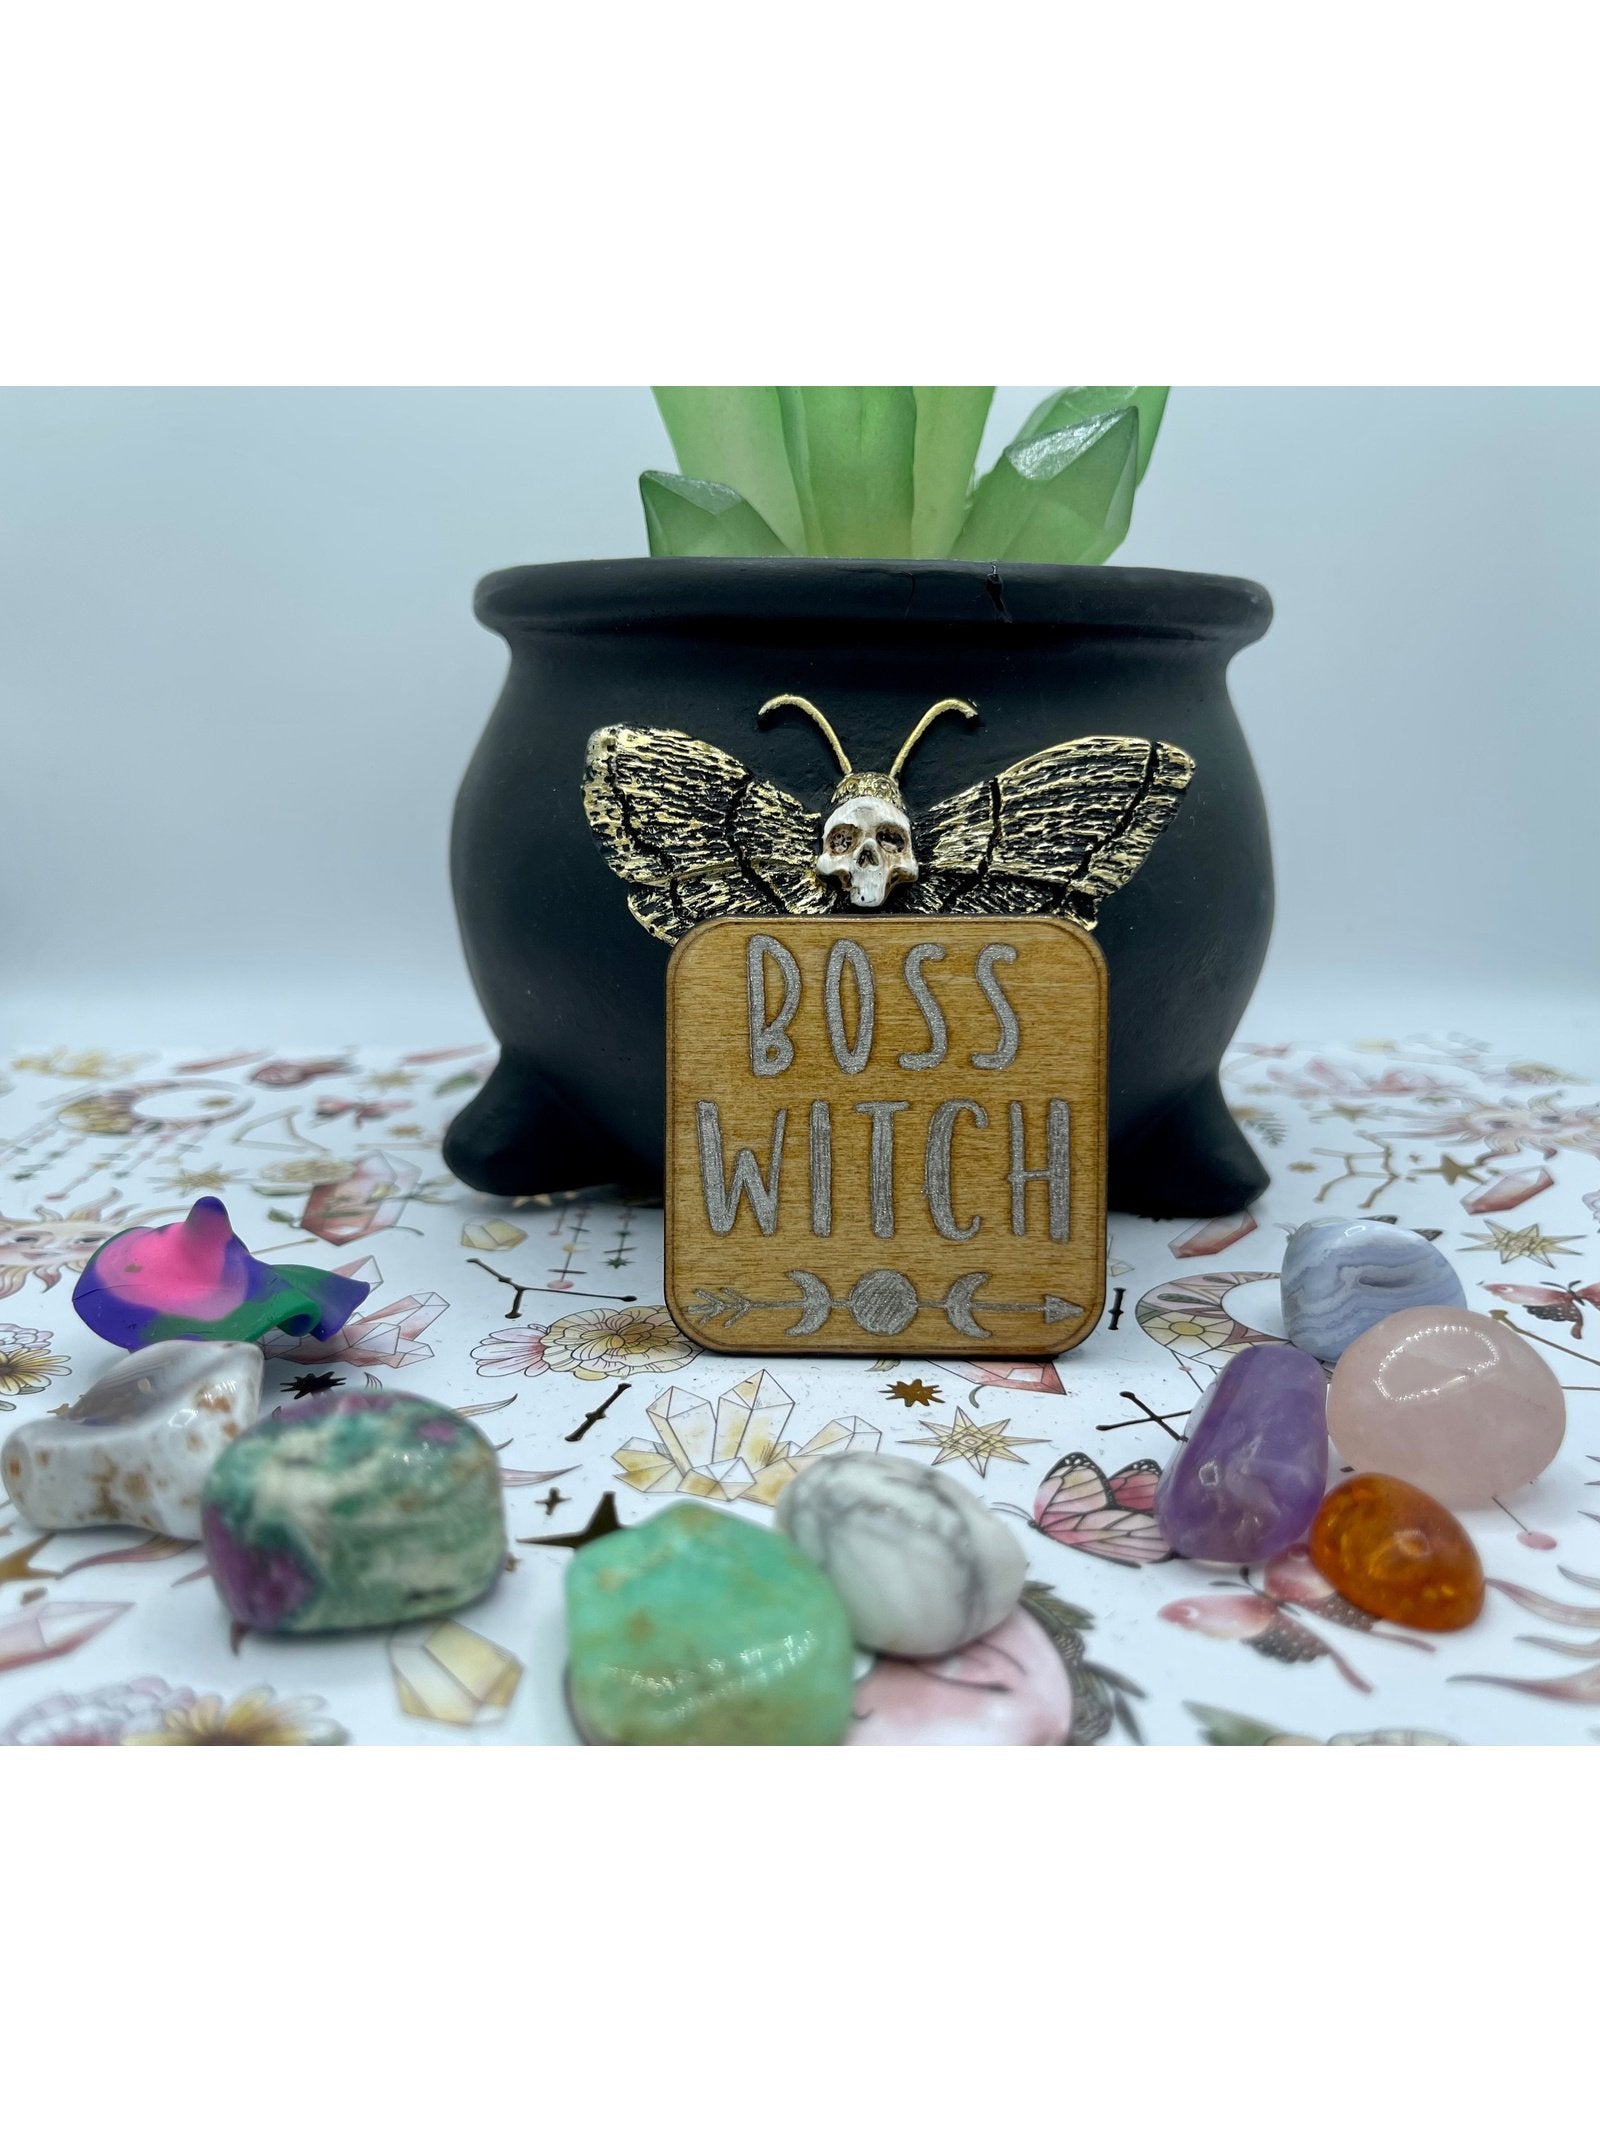 Boss Witch Pin